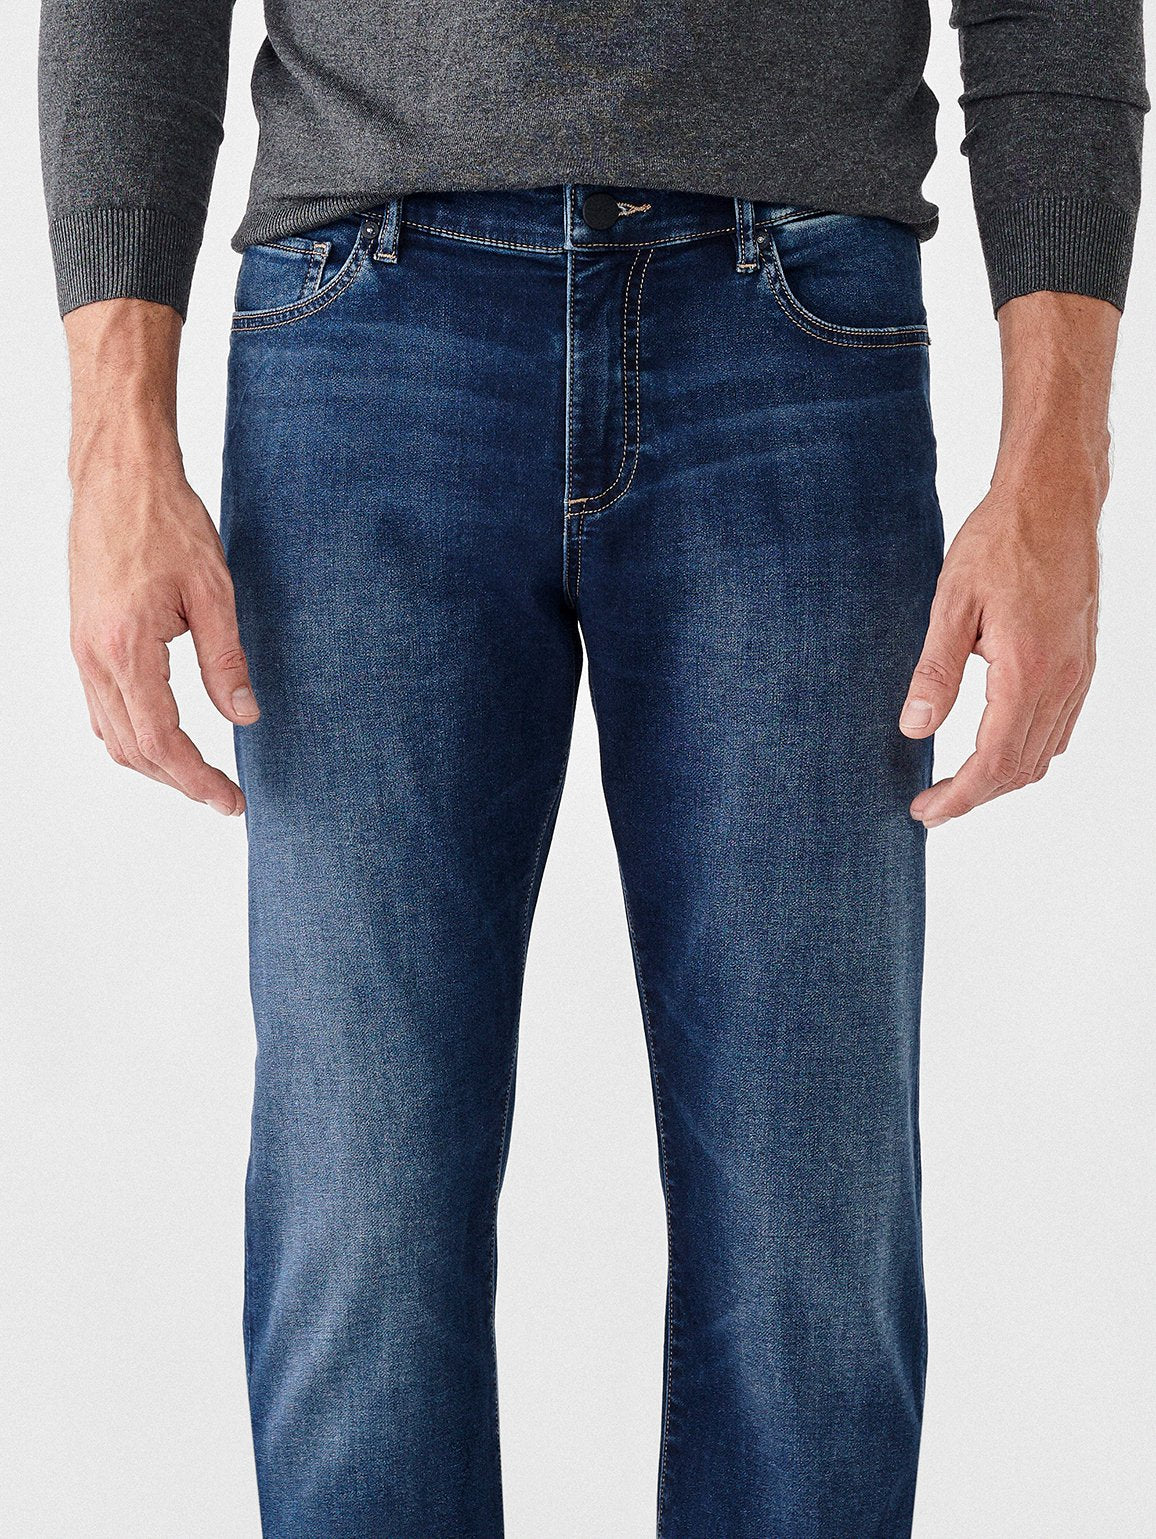 blue jean jumper pants